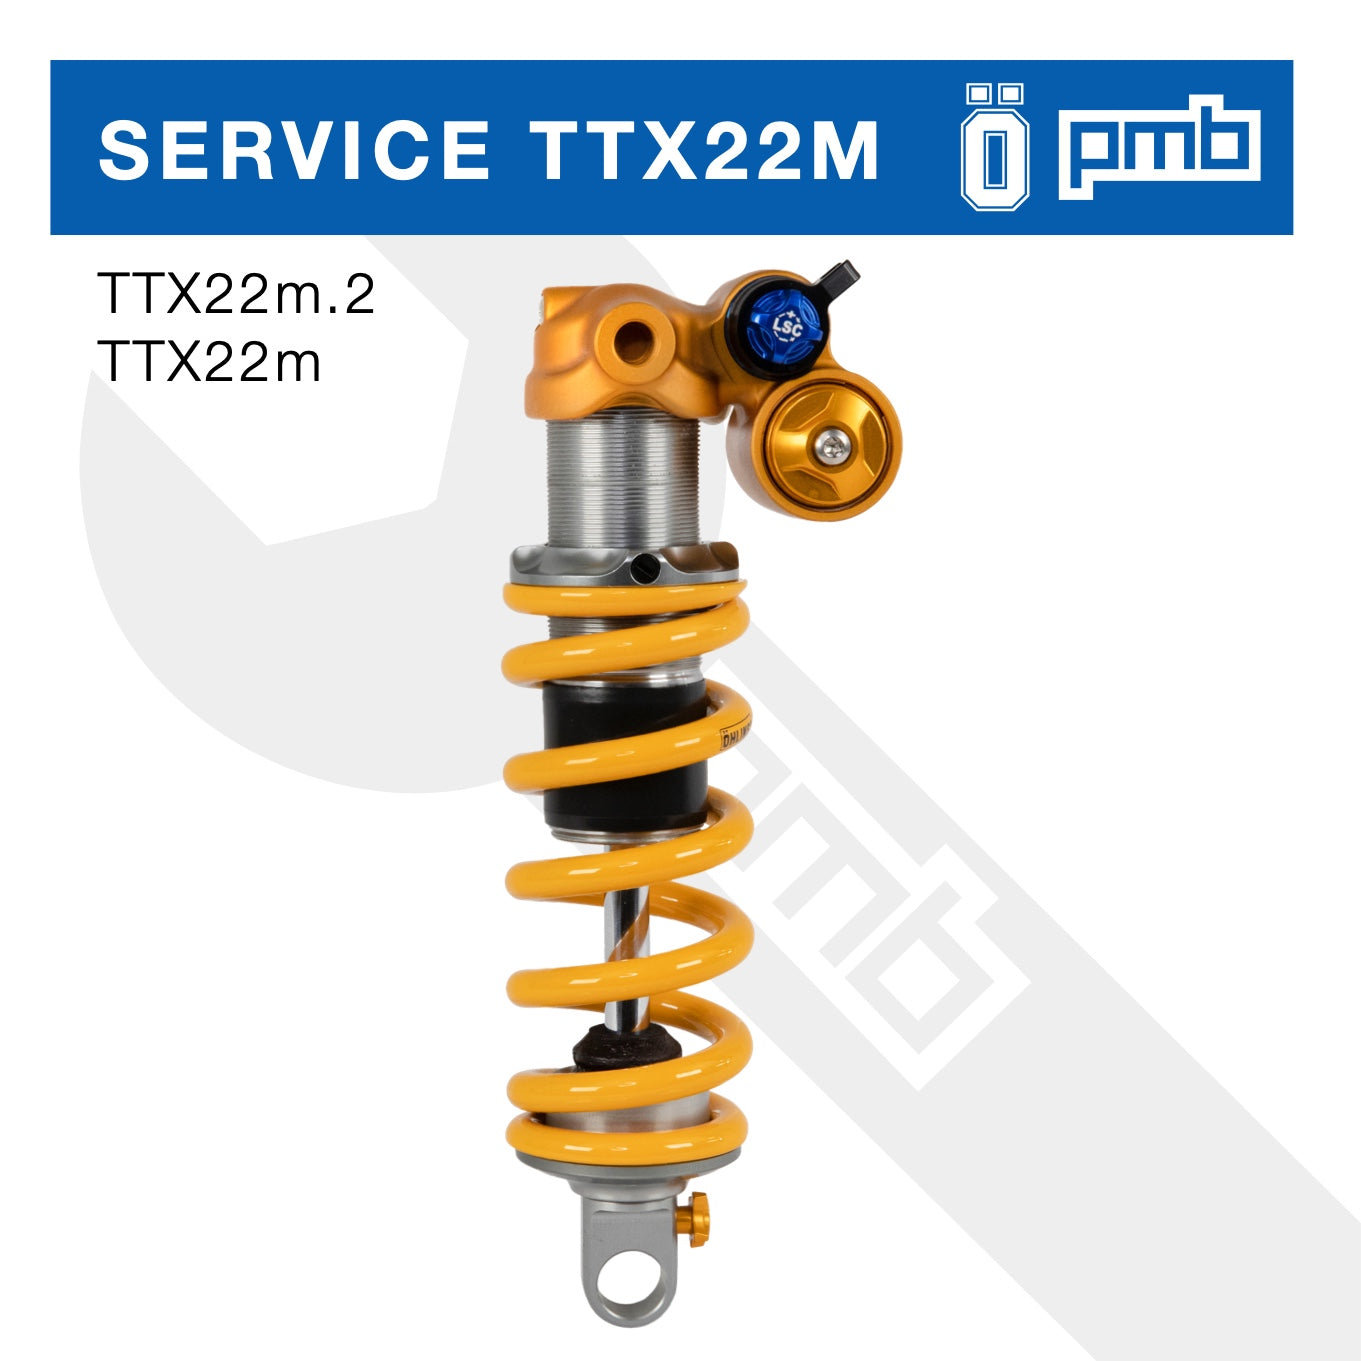 Öhlins TTX22m.2 / TTX22m Service